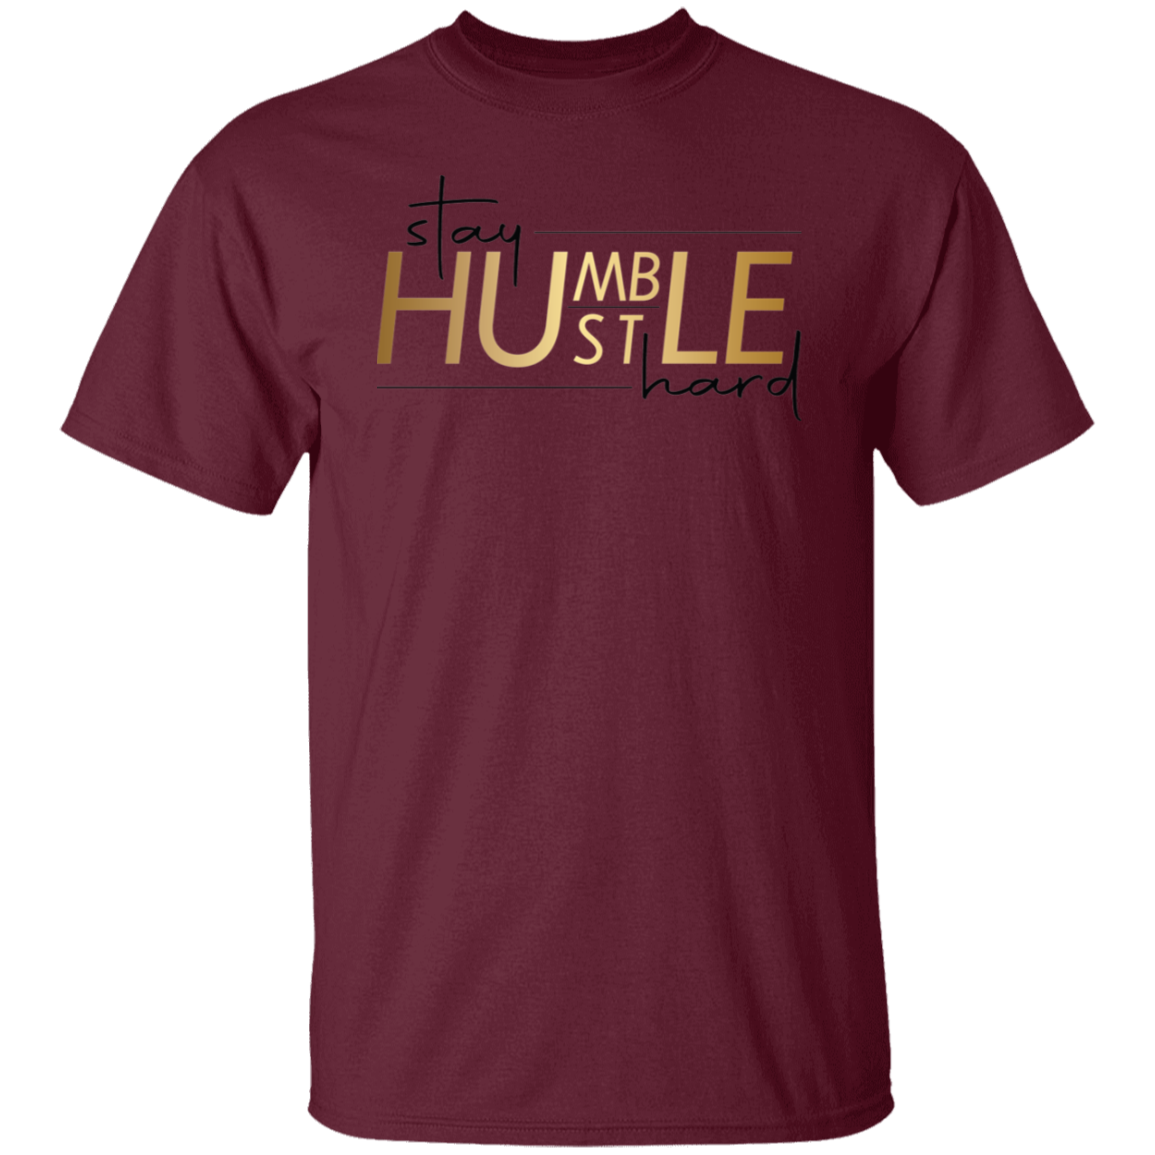 Humble Hustle